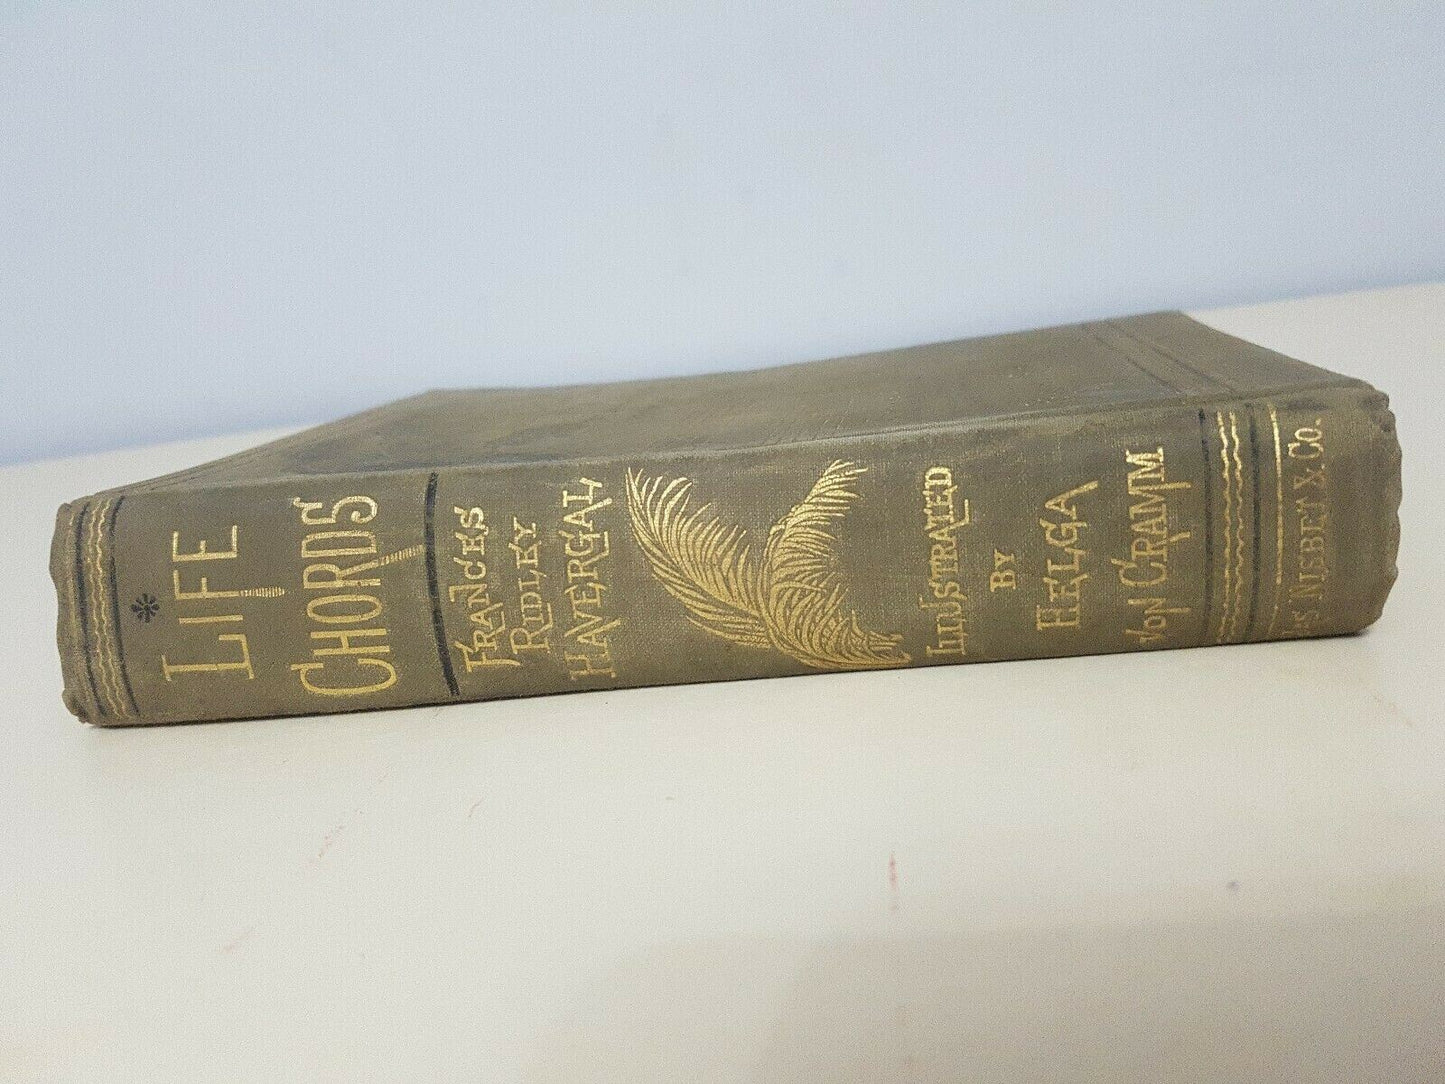 eb3002 1880 Life Chords - Twelfth Edition - Frances Ridley Havergal Zenith etc